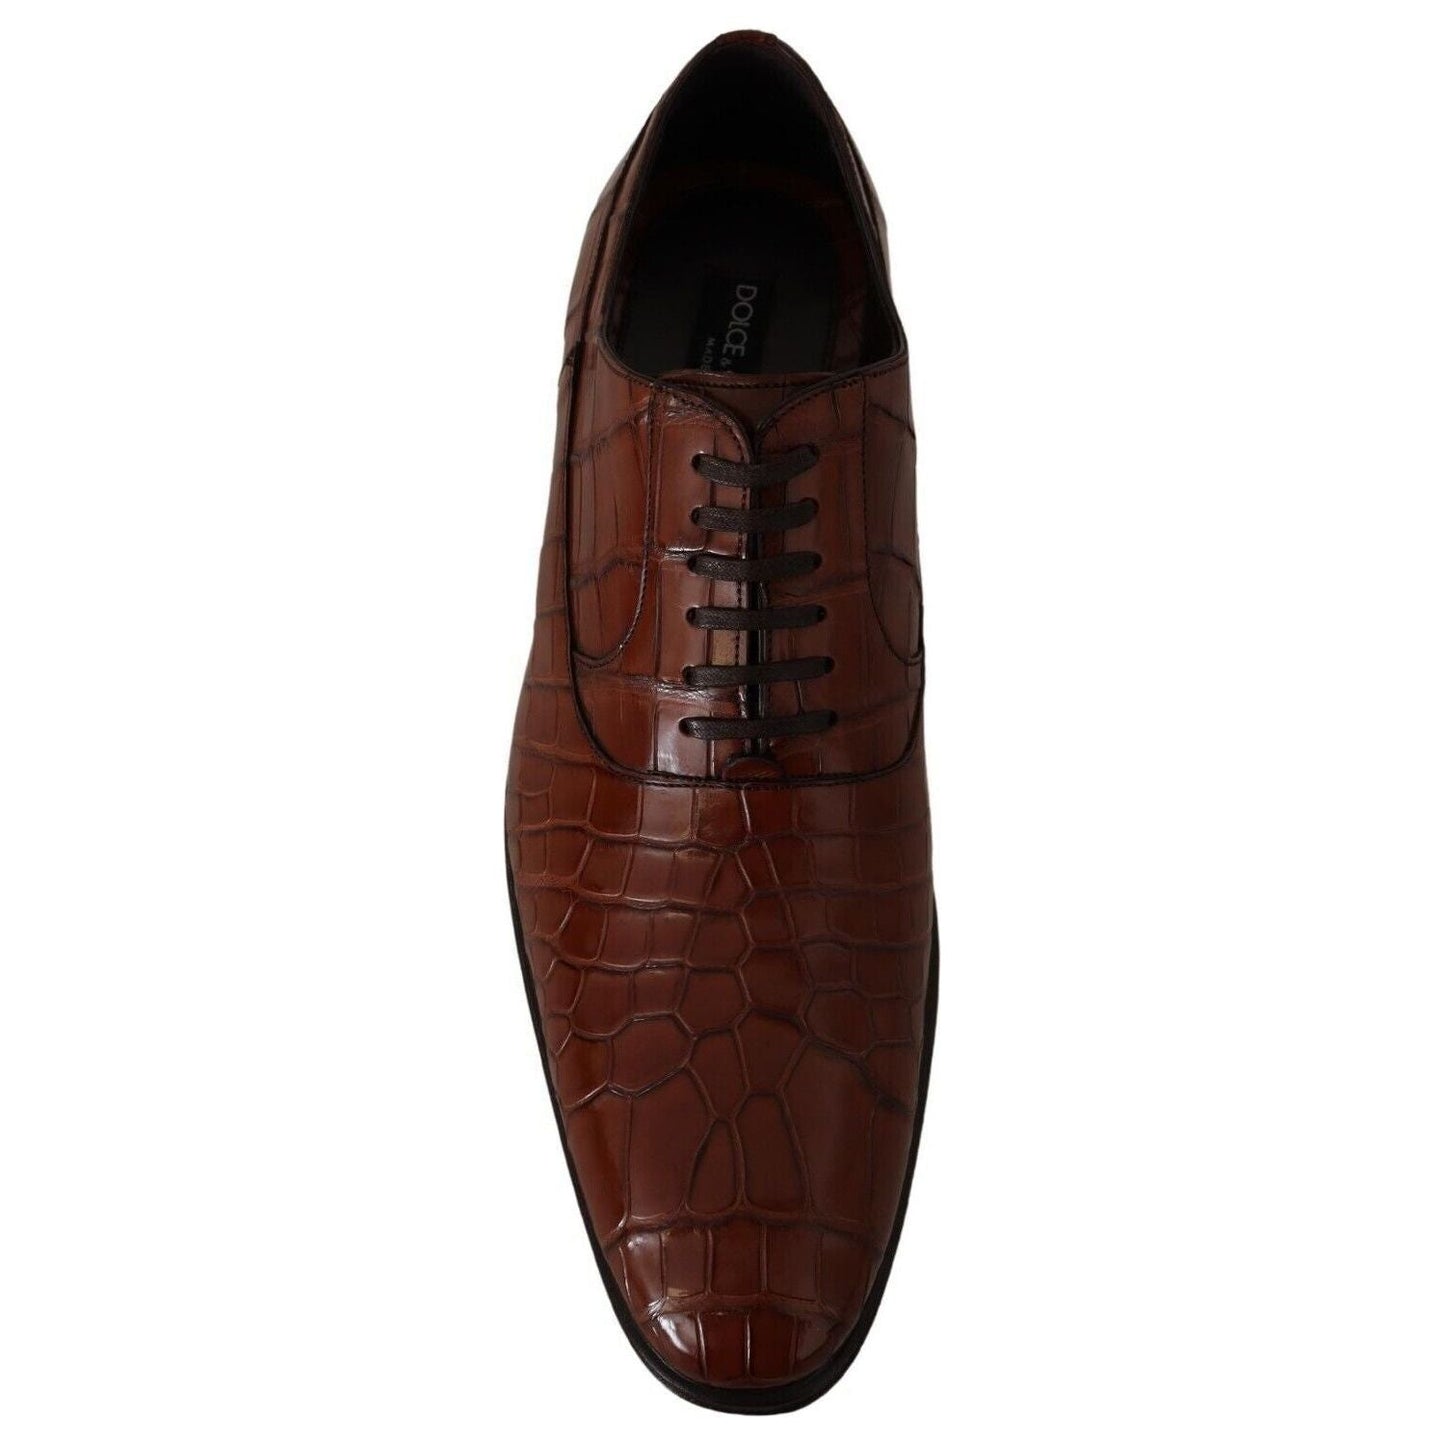 Dolce & Gabbana Elegant Exotic Crocodile Leather Formal Shoes brown-crocodile-leather-mens-formal-derby-shoes